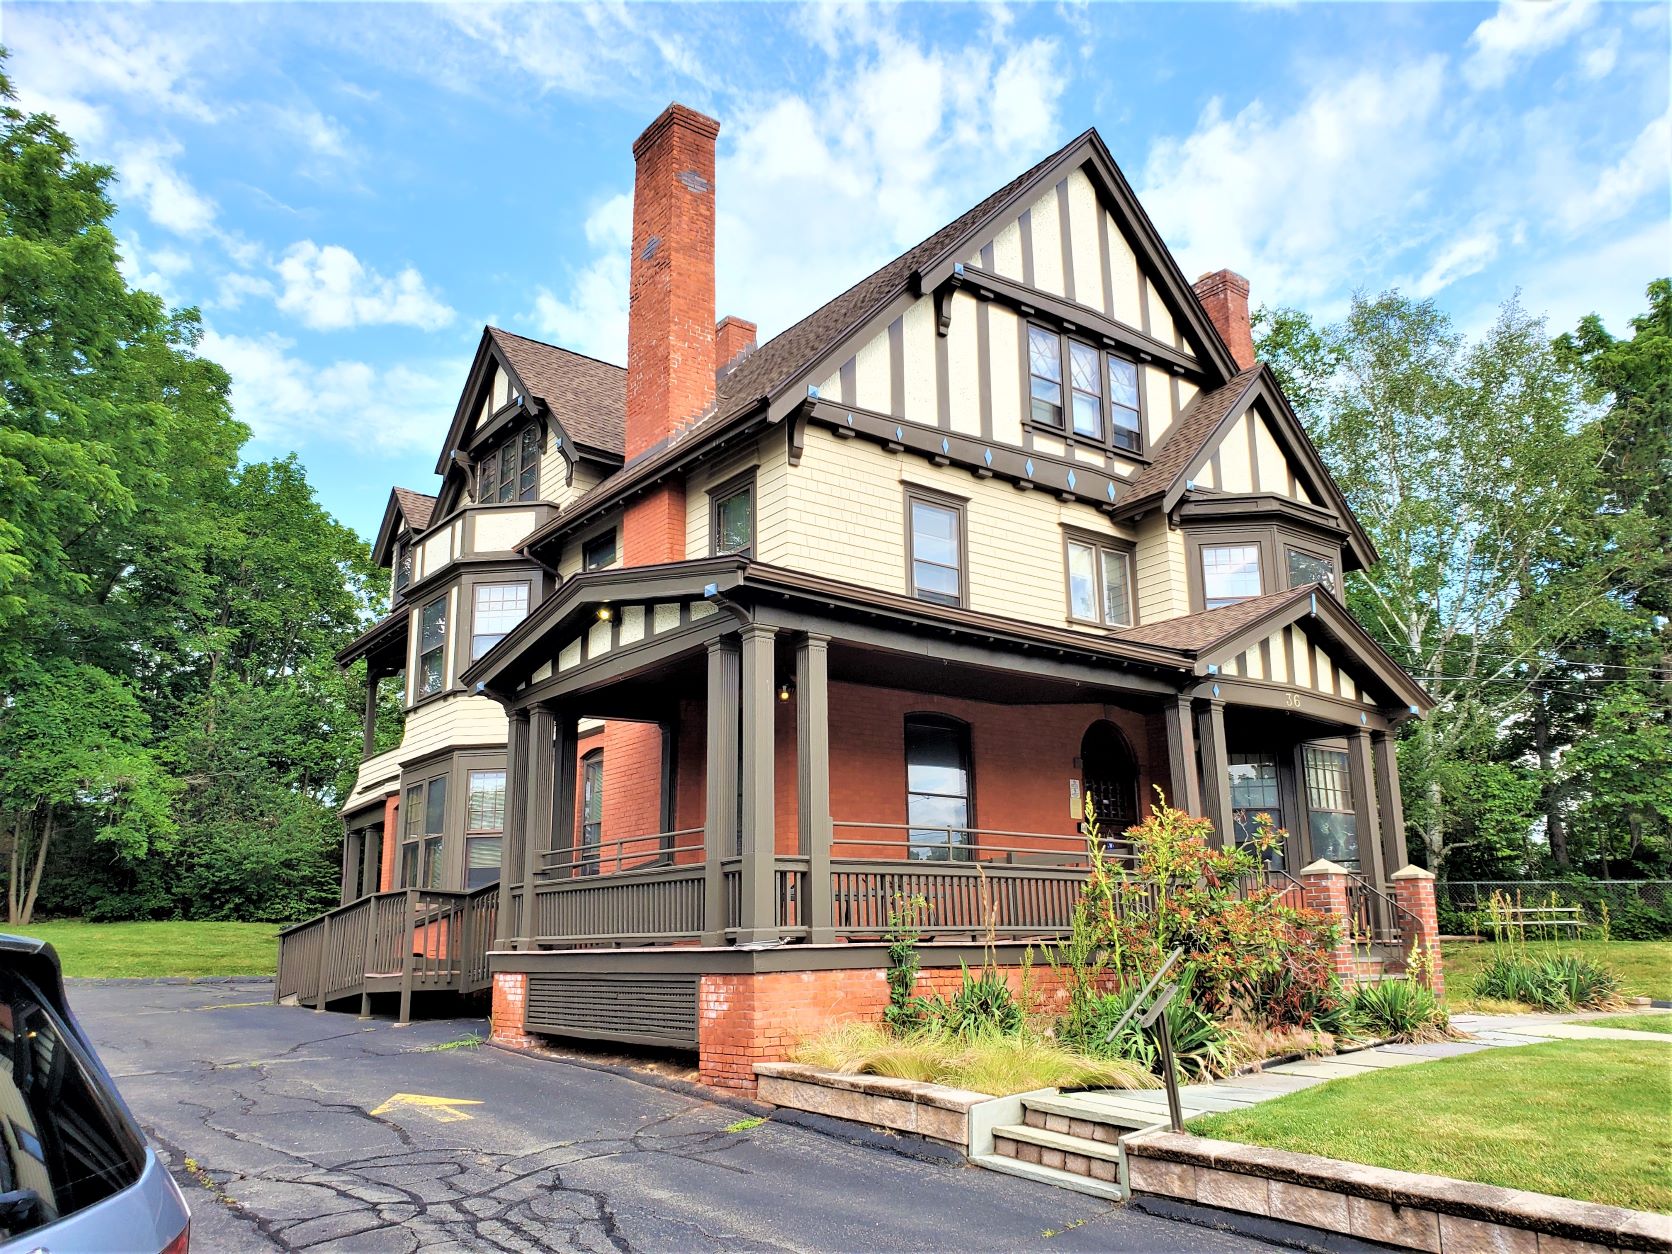 New Britain Sober House │ Sober Living for Men near Hartford, Connecticut